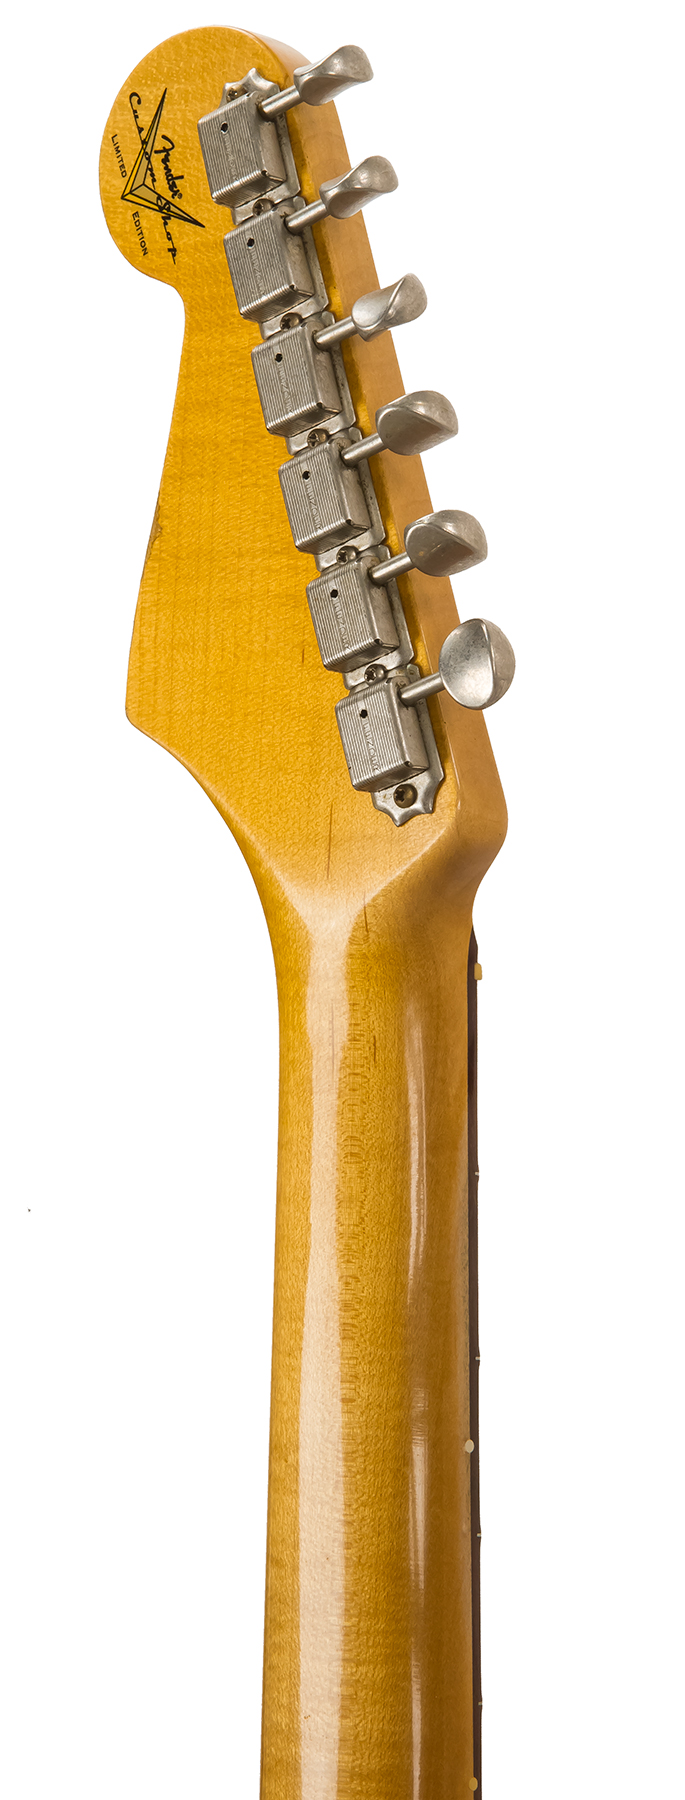 Fender Custom Shop Strat 1960 Rw #cz544406 - Relic Aztec Gold - Str shape electric guitar - Variation 6